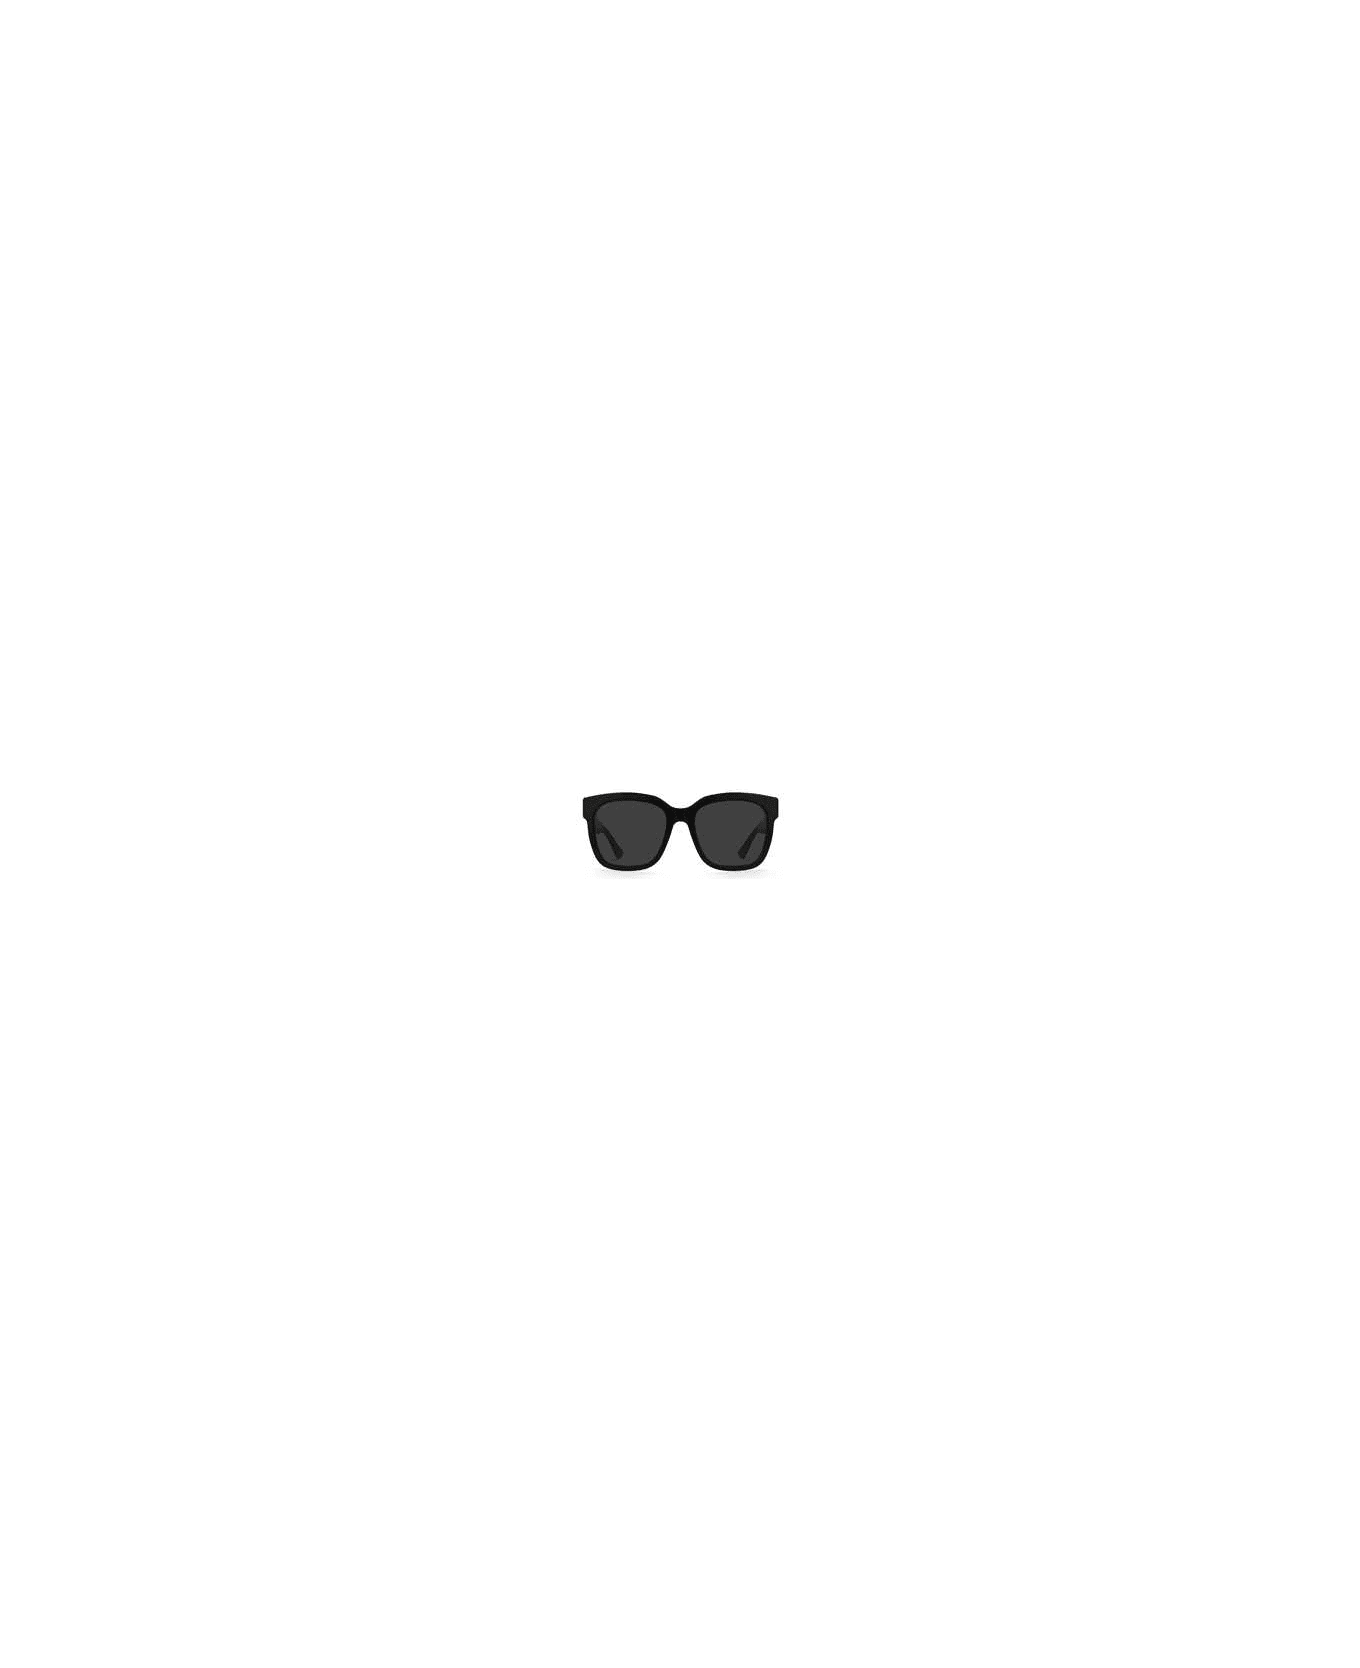 Gucci Eyewear Gg0034sn Sunglasses - 001 black black grey サングラス